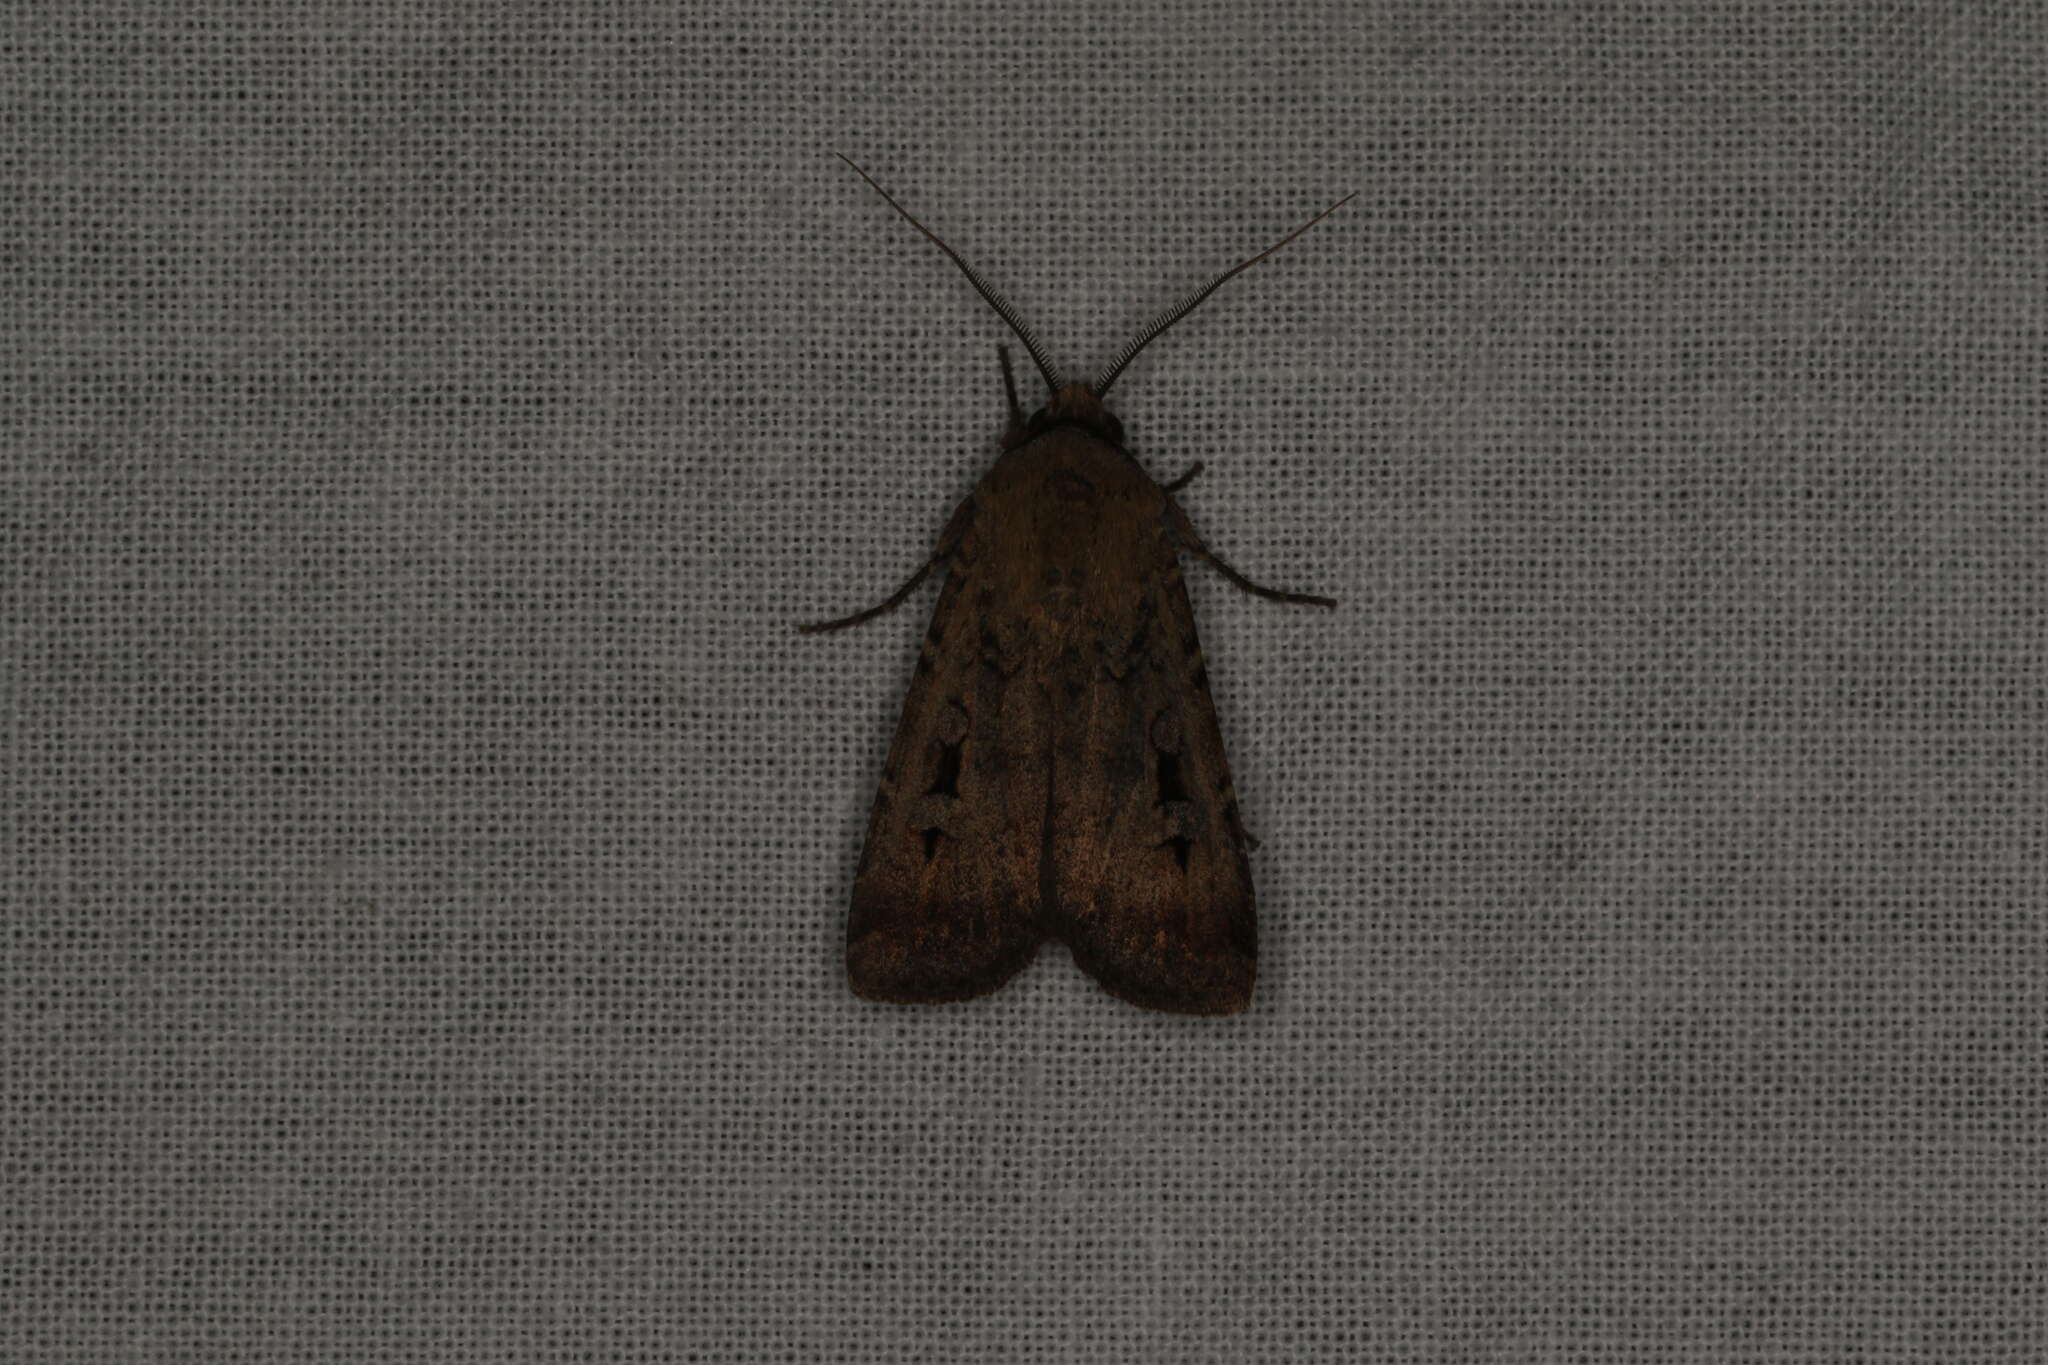 Image of Bogong moth